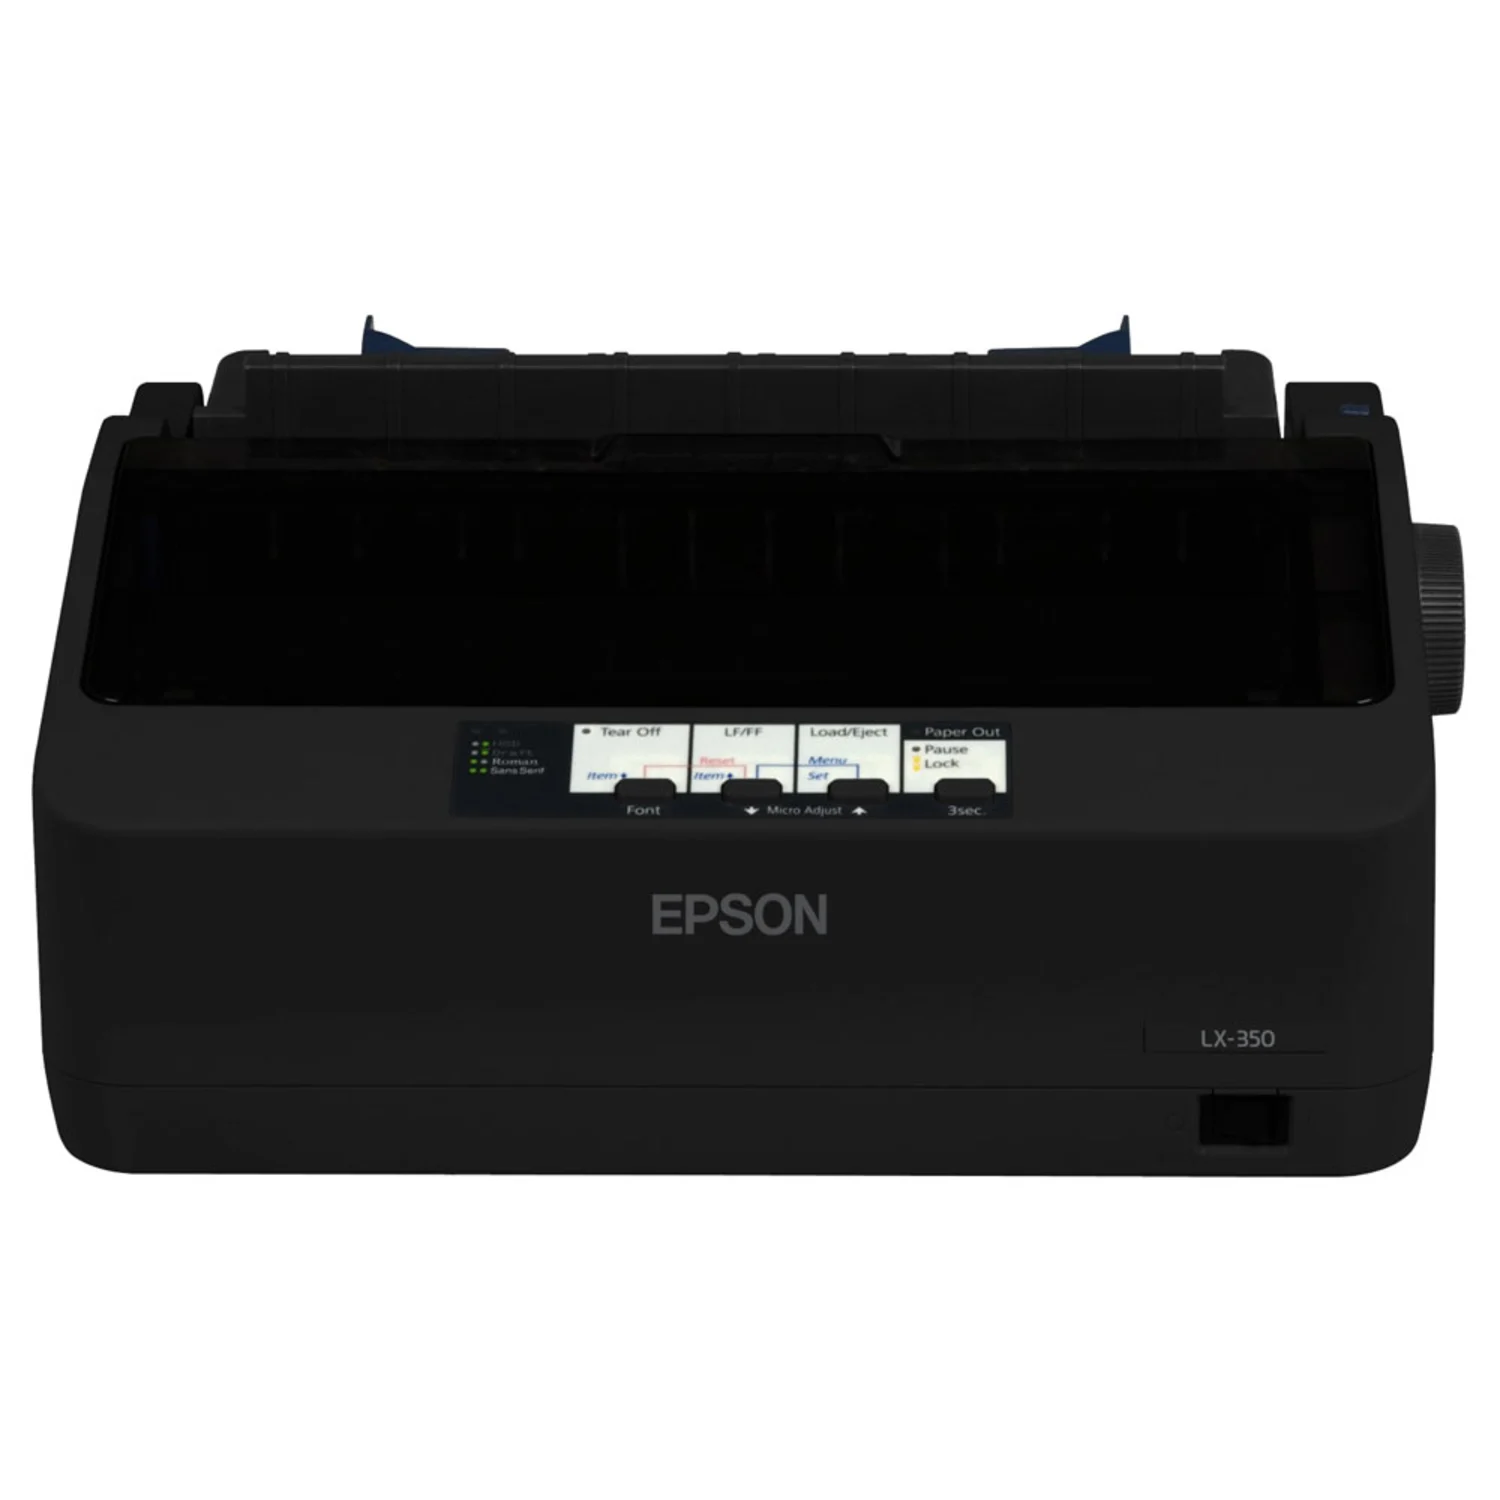 Impressora Epson LX-350 Matricial USB / 110V l 220V